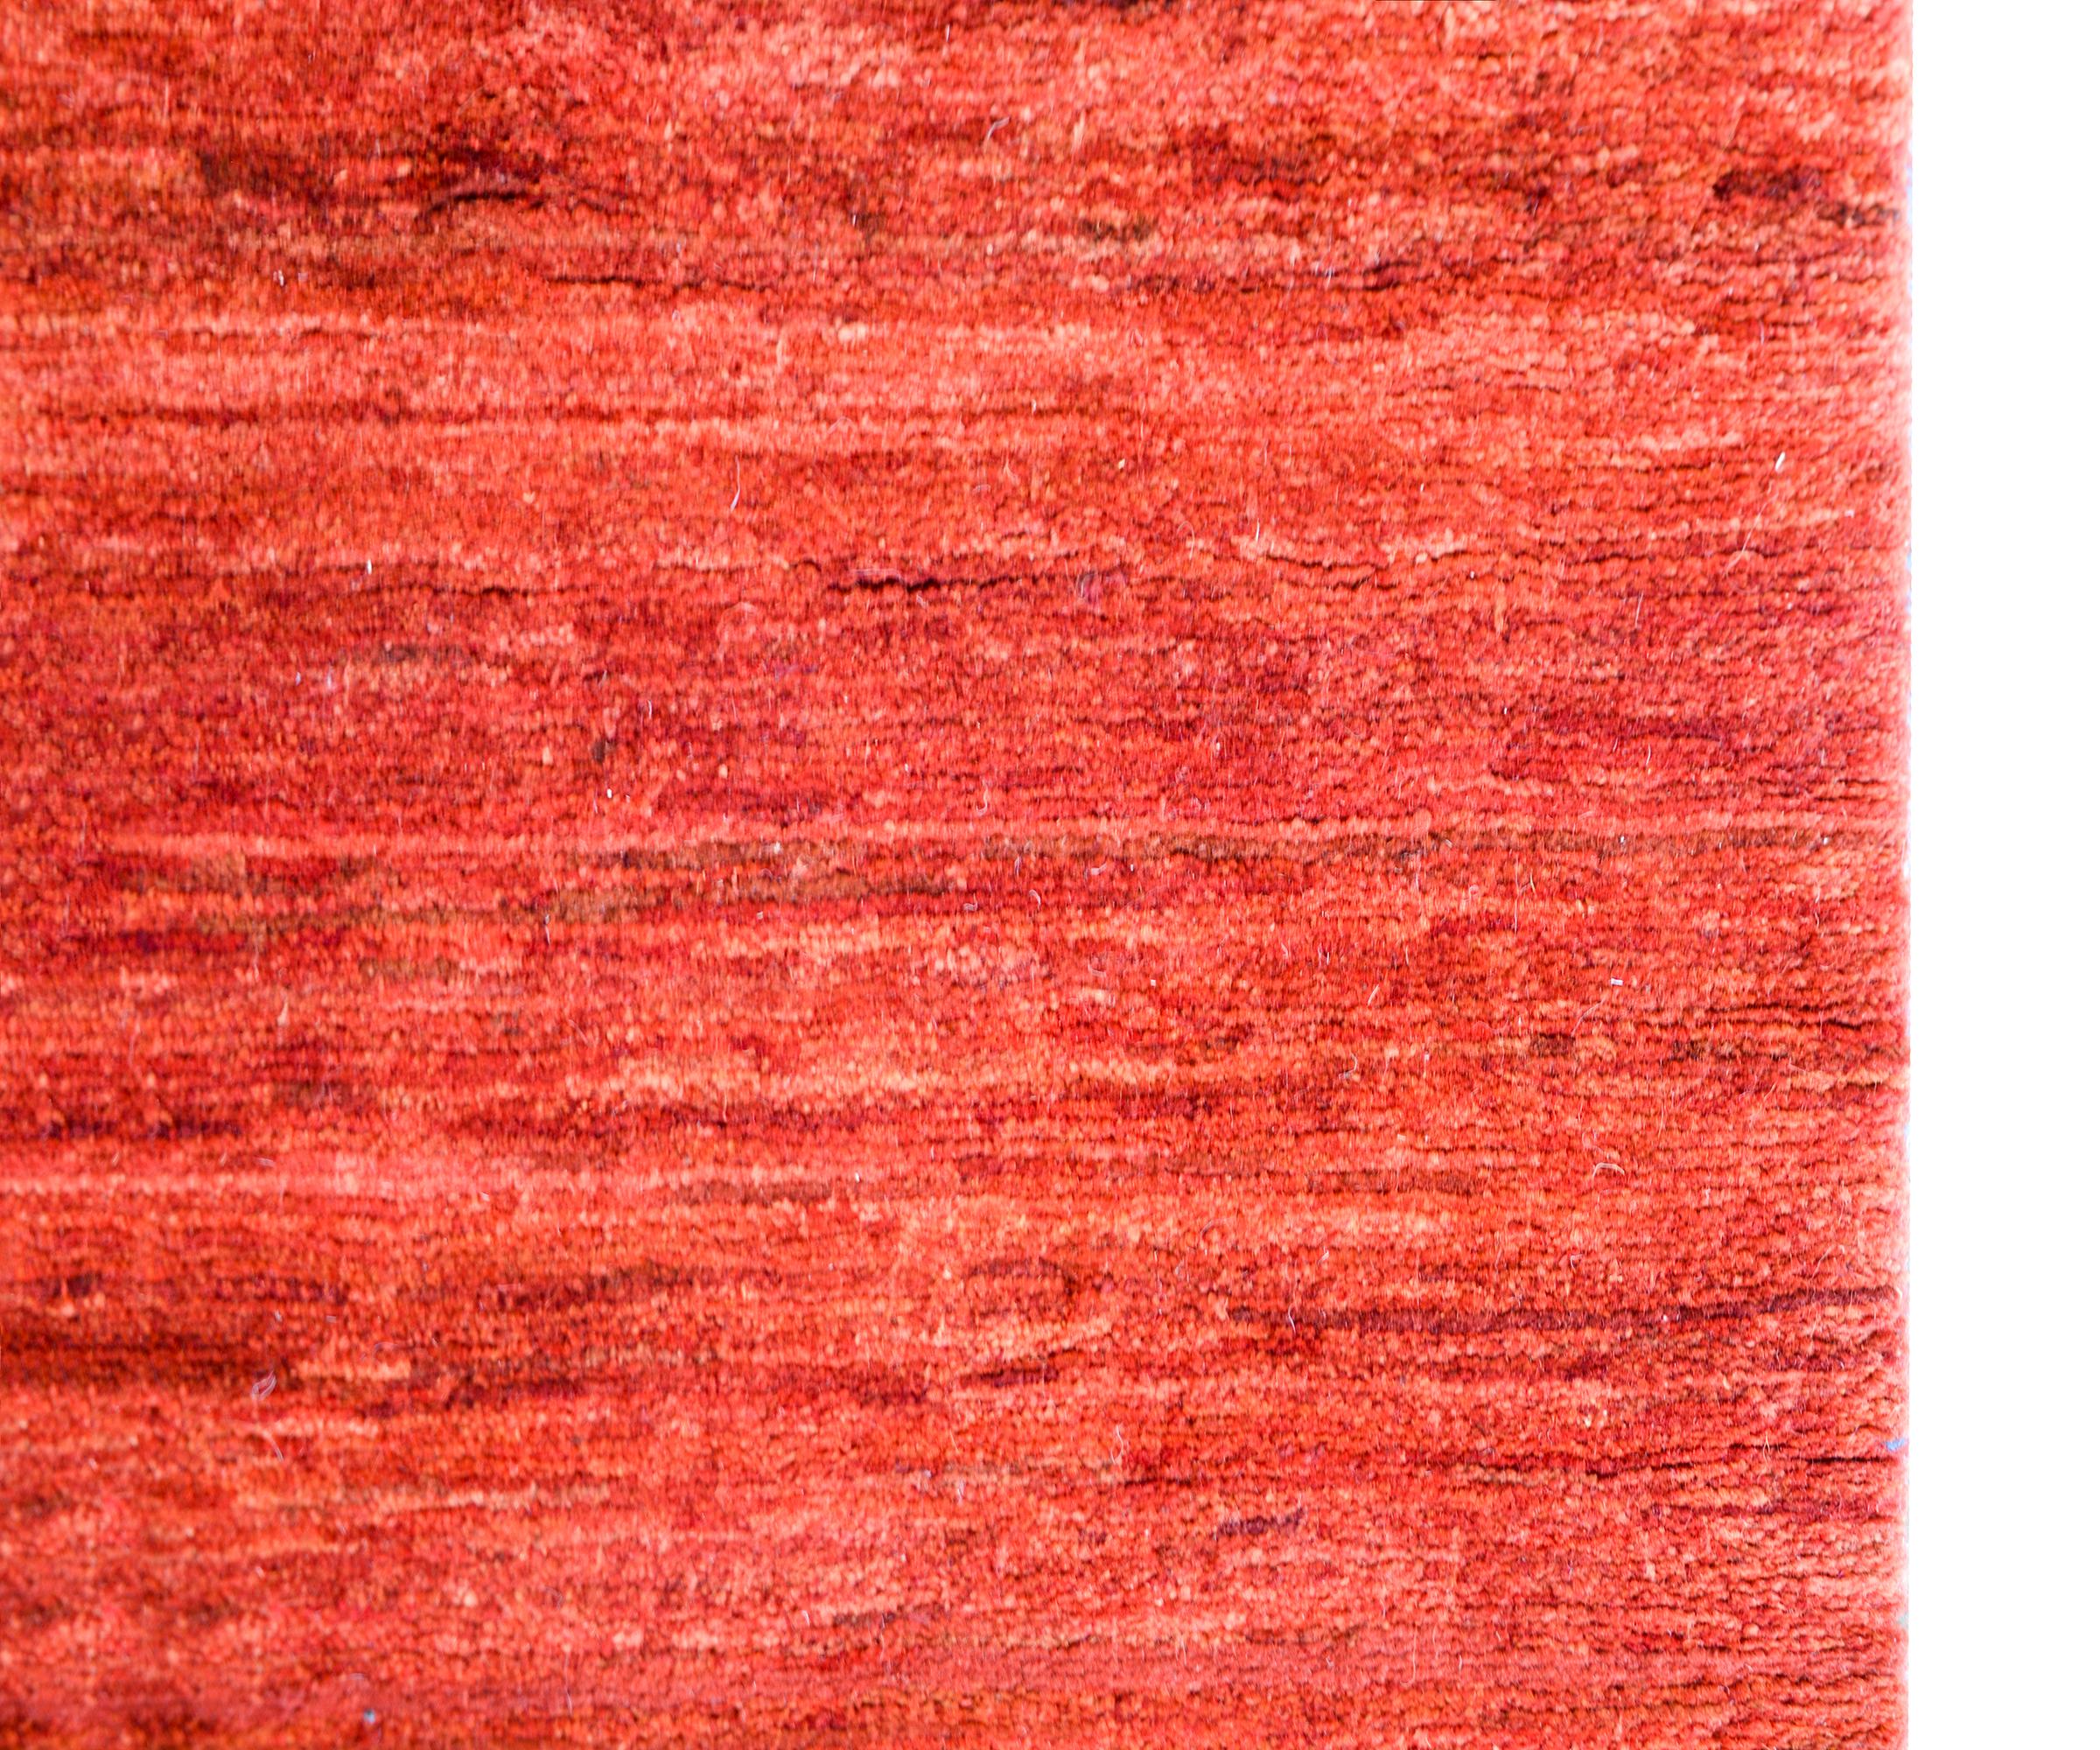 A wonderful vintage Gabbeh rug with a wonderful all-over abrash crimson field with no border.